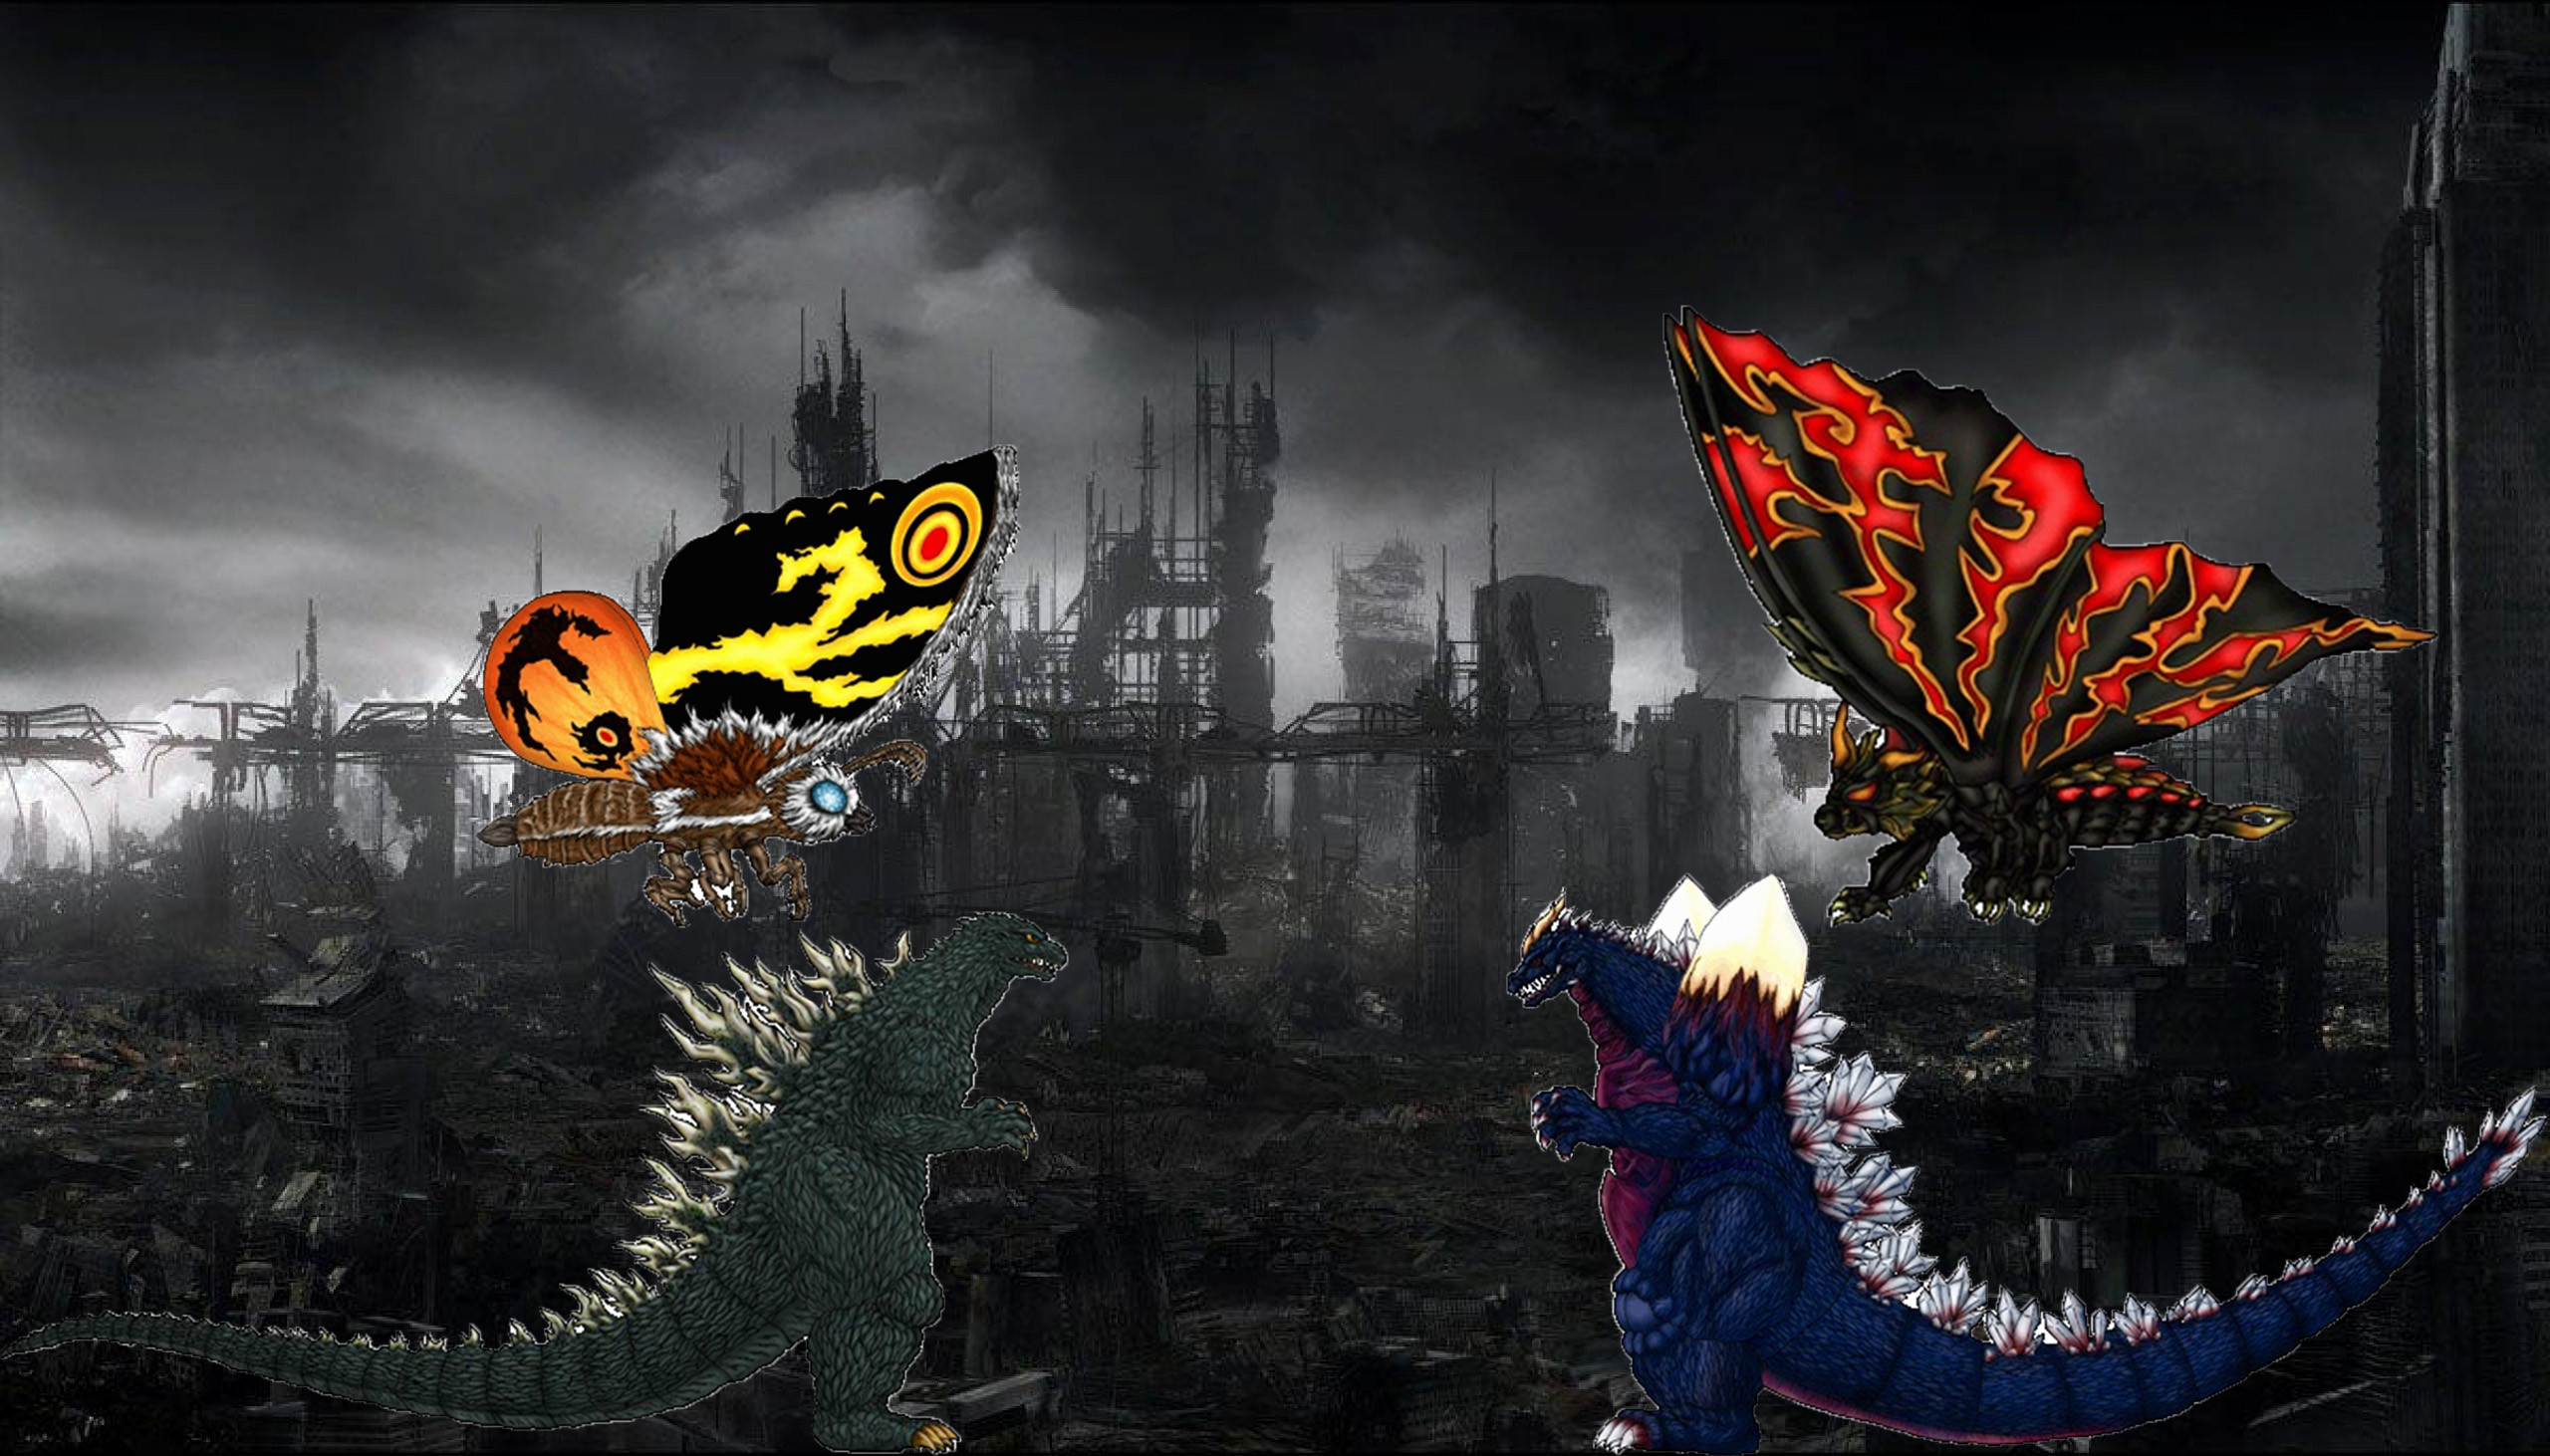 Made a Godzilla vs Mothra 1992 wallpaper What do you guys think   rGODZILLA